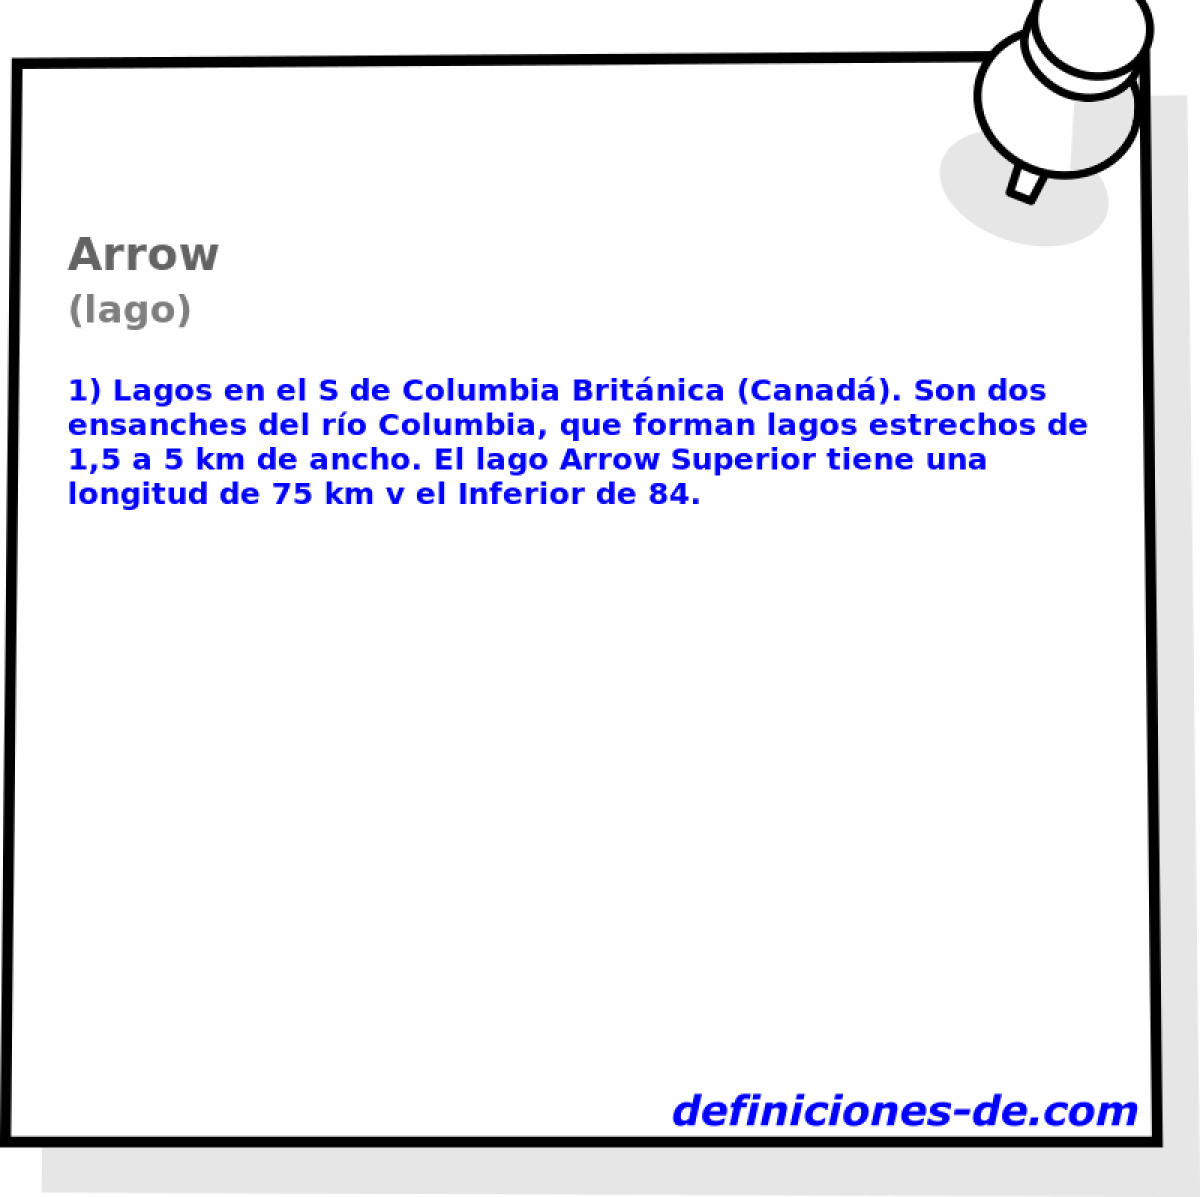 Arrow (lago)